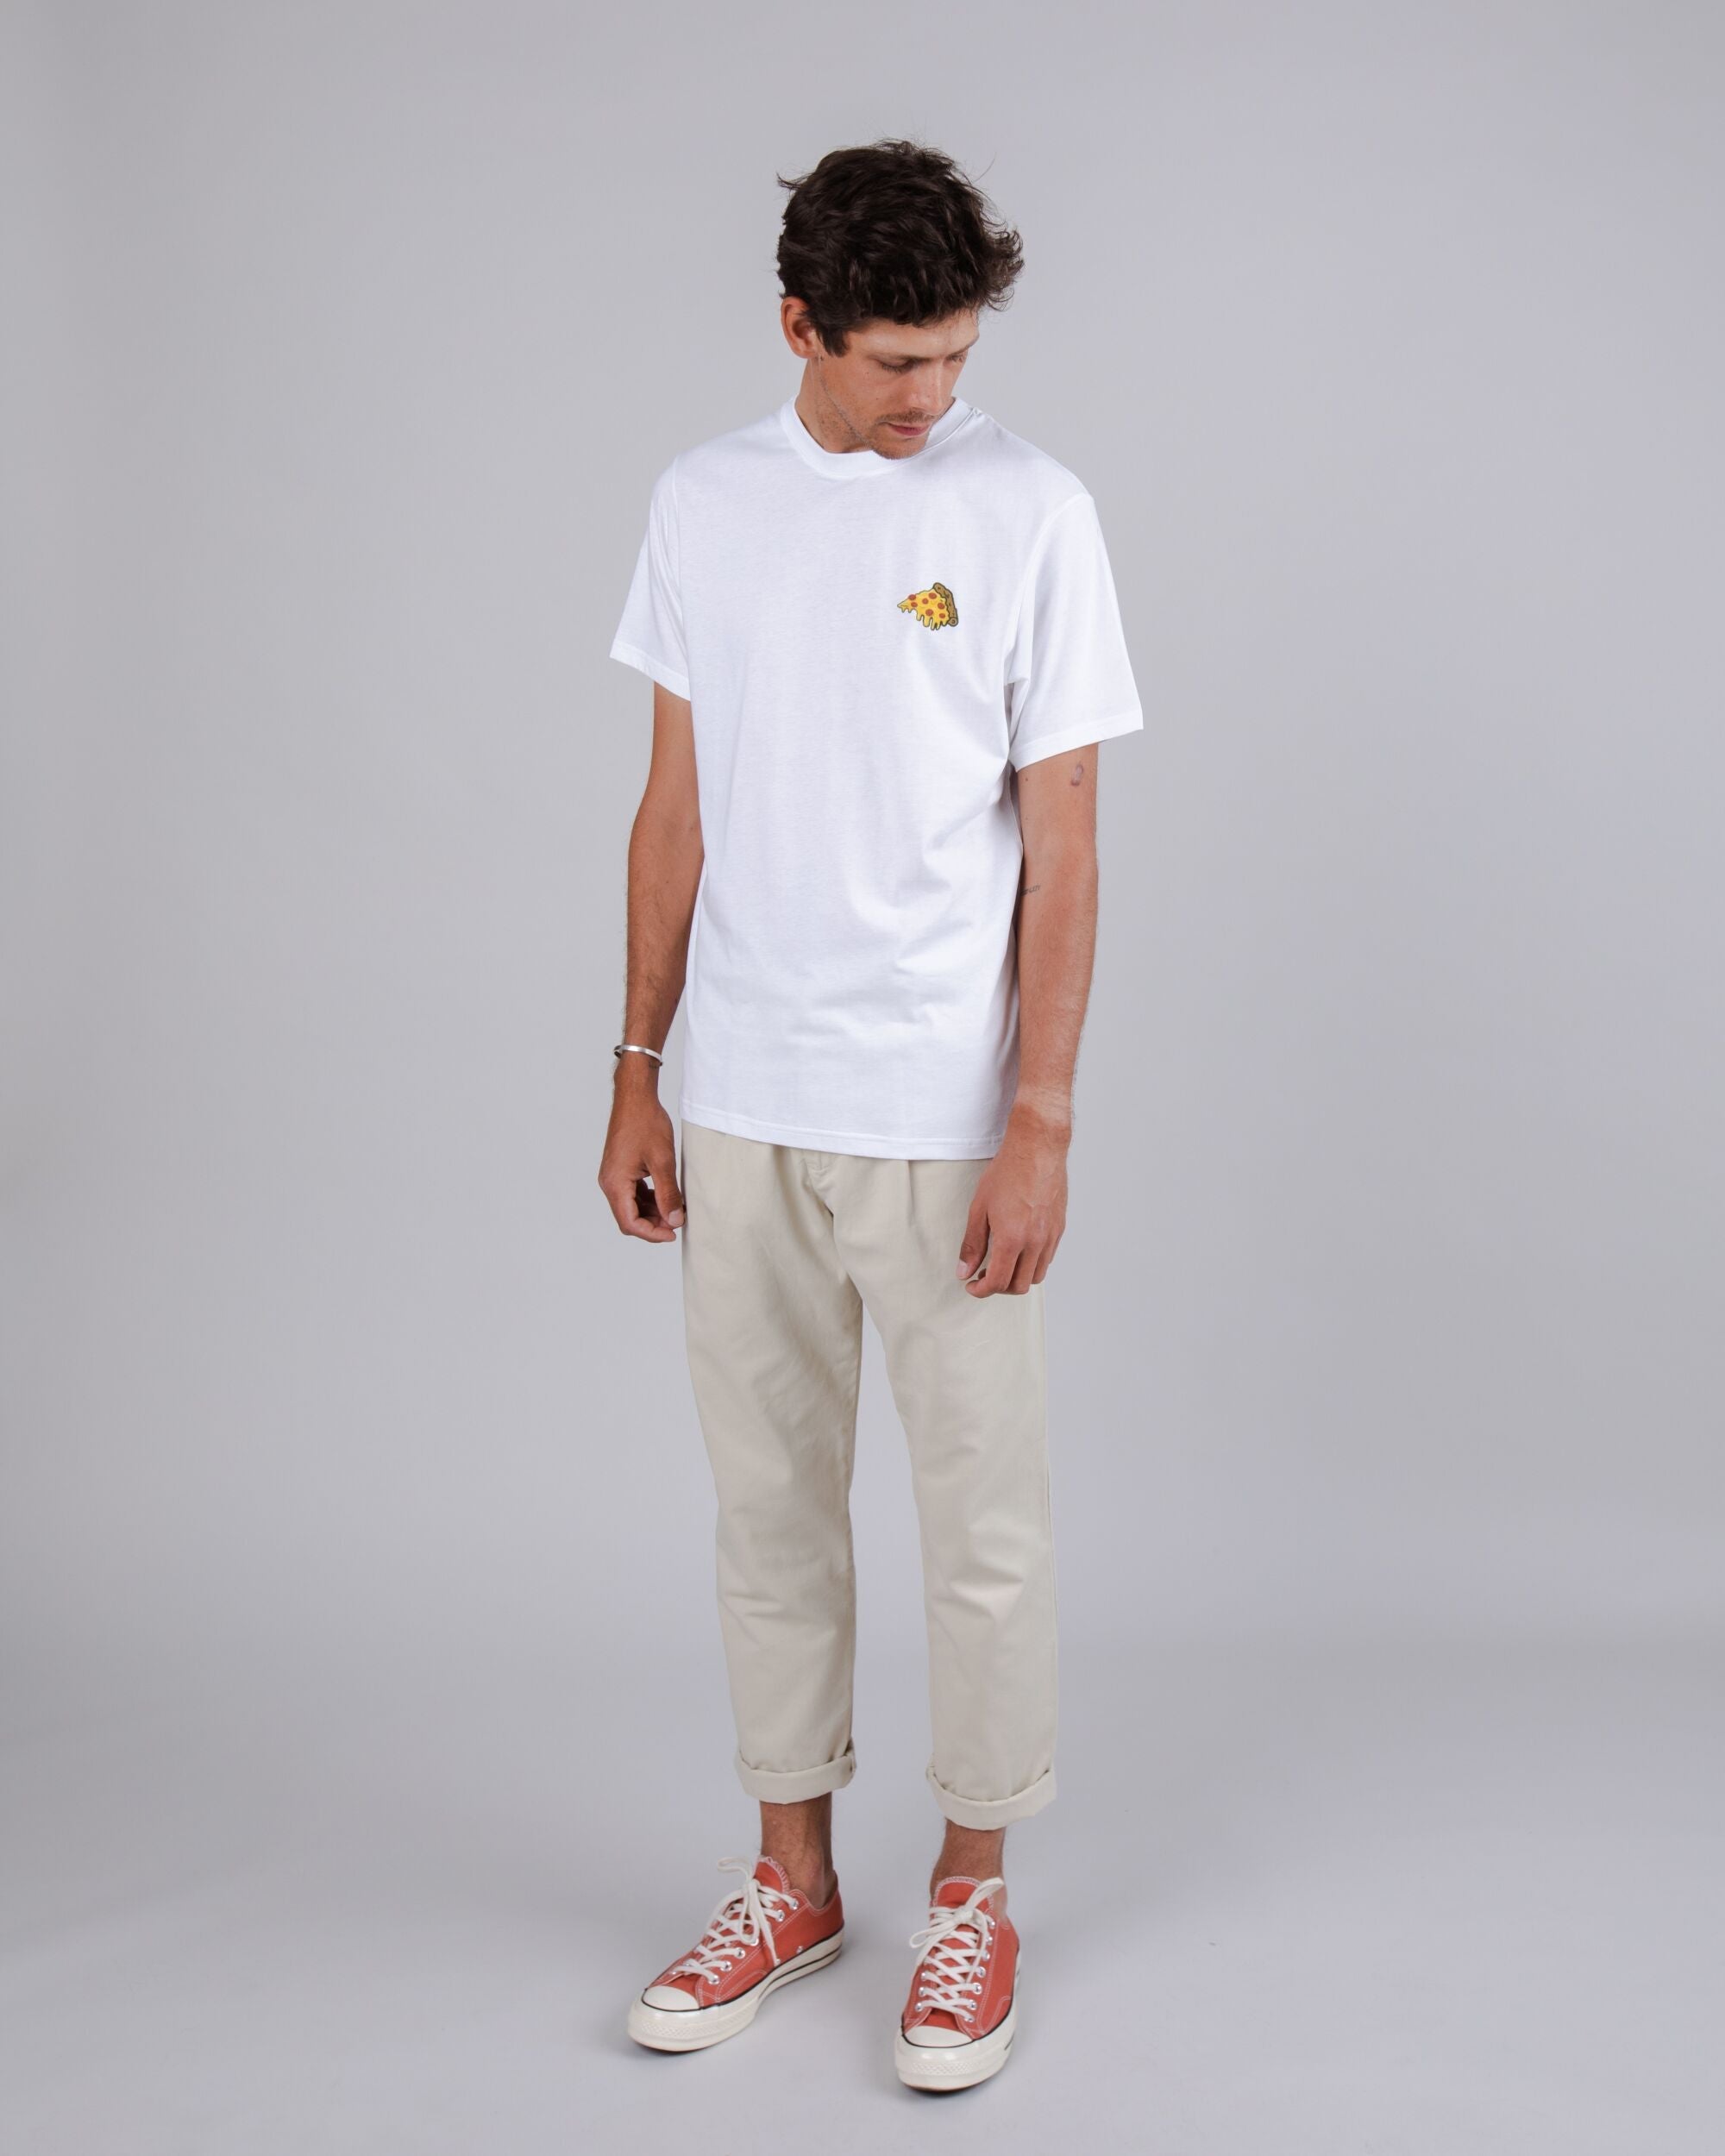 White, printed T-shirt Ornamante made from 100% organic cotton from Brava Fabrics